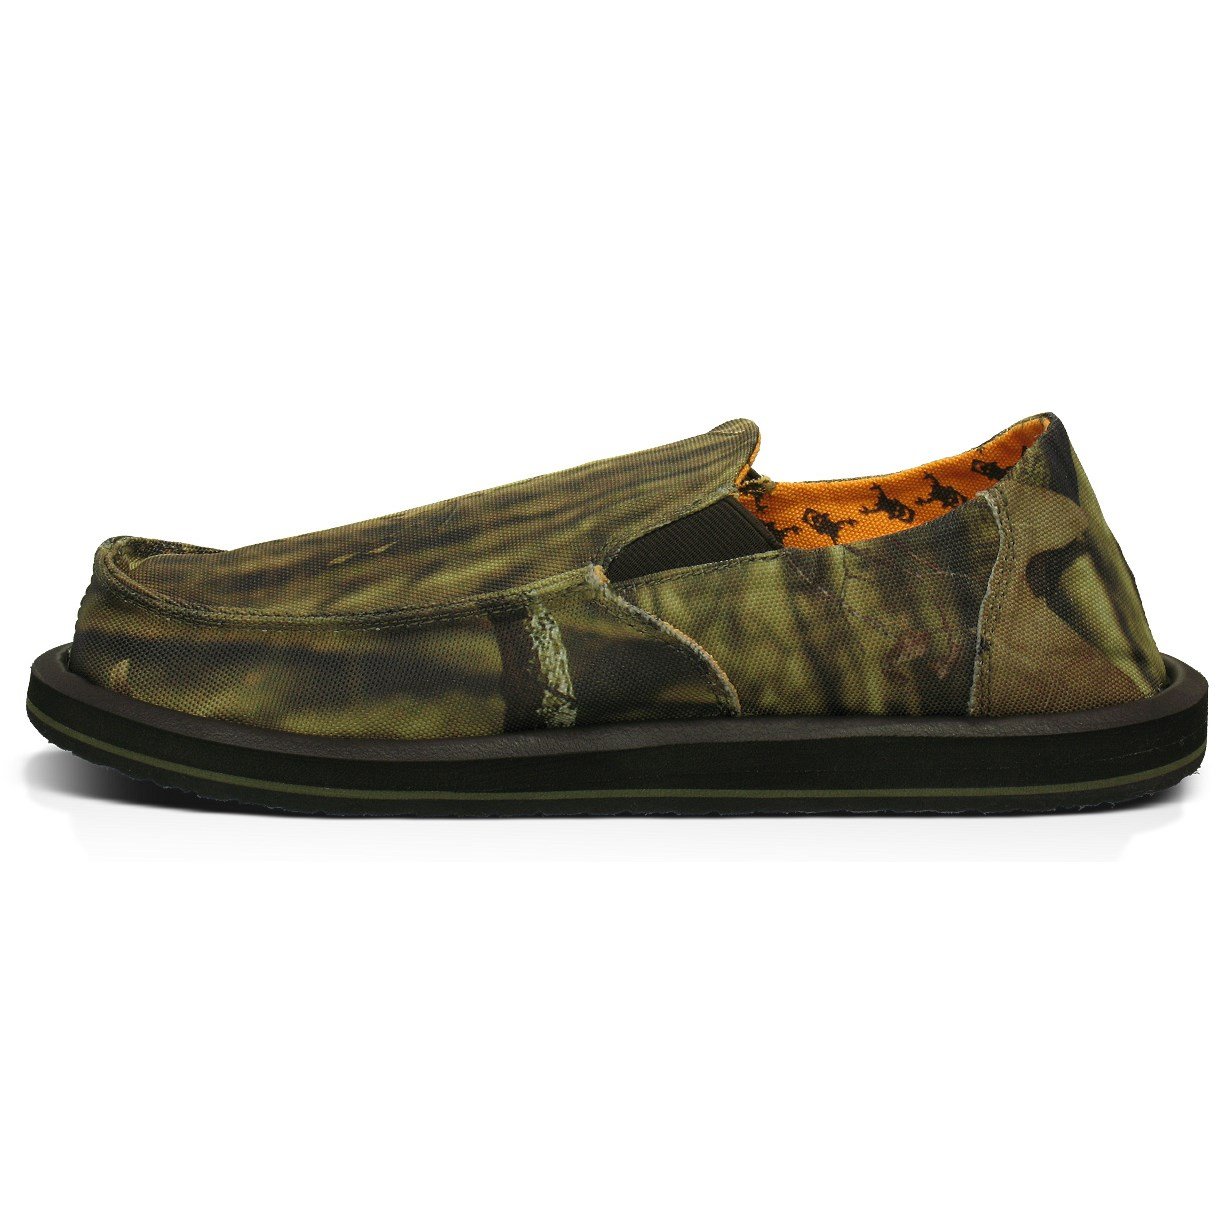 Sanuk Vagabond Mossy Oak Slip On Shoes - Men's